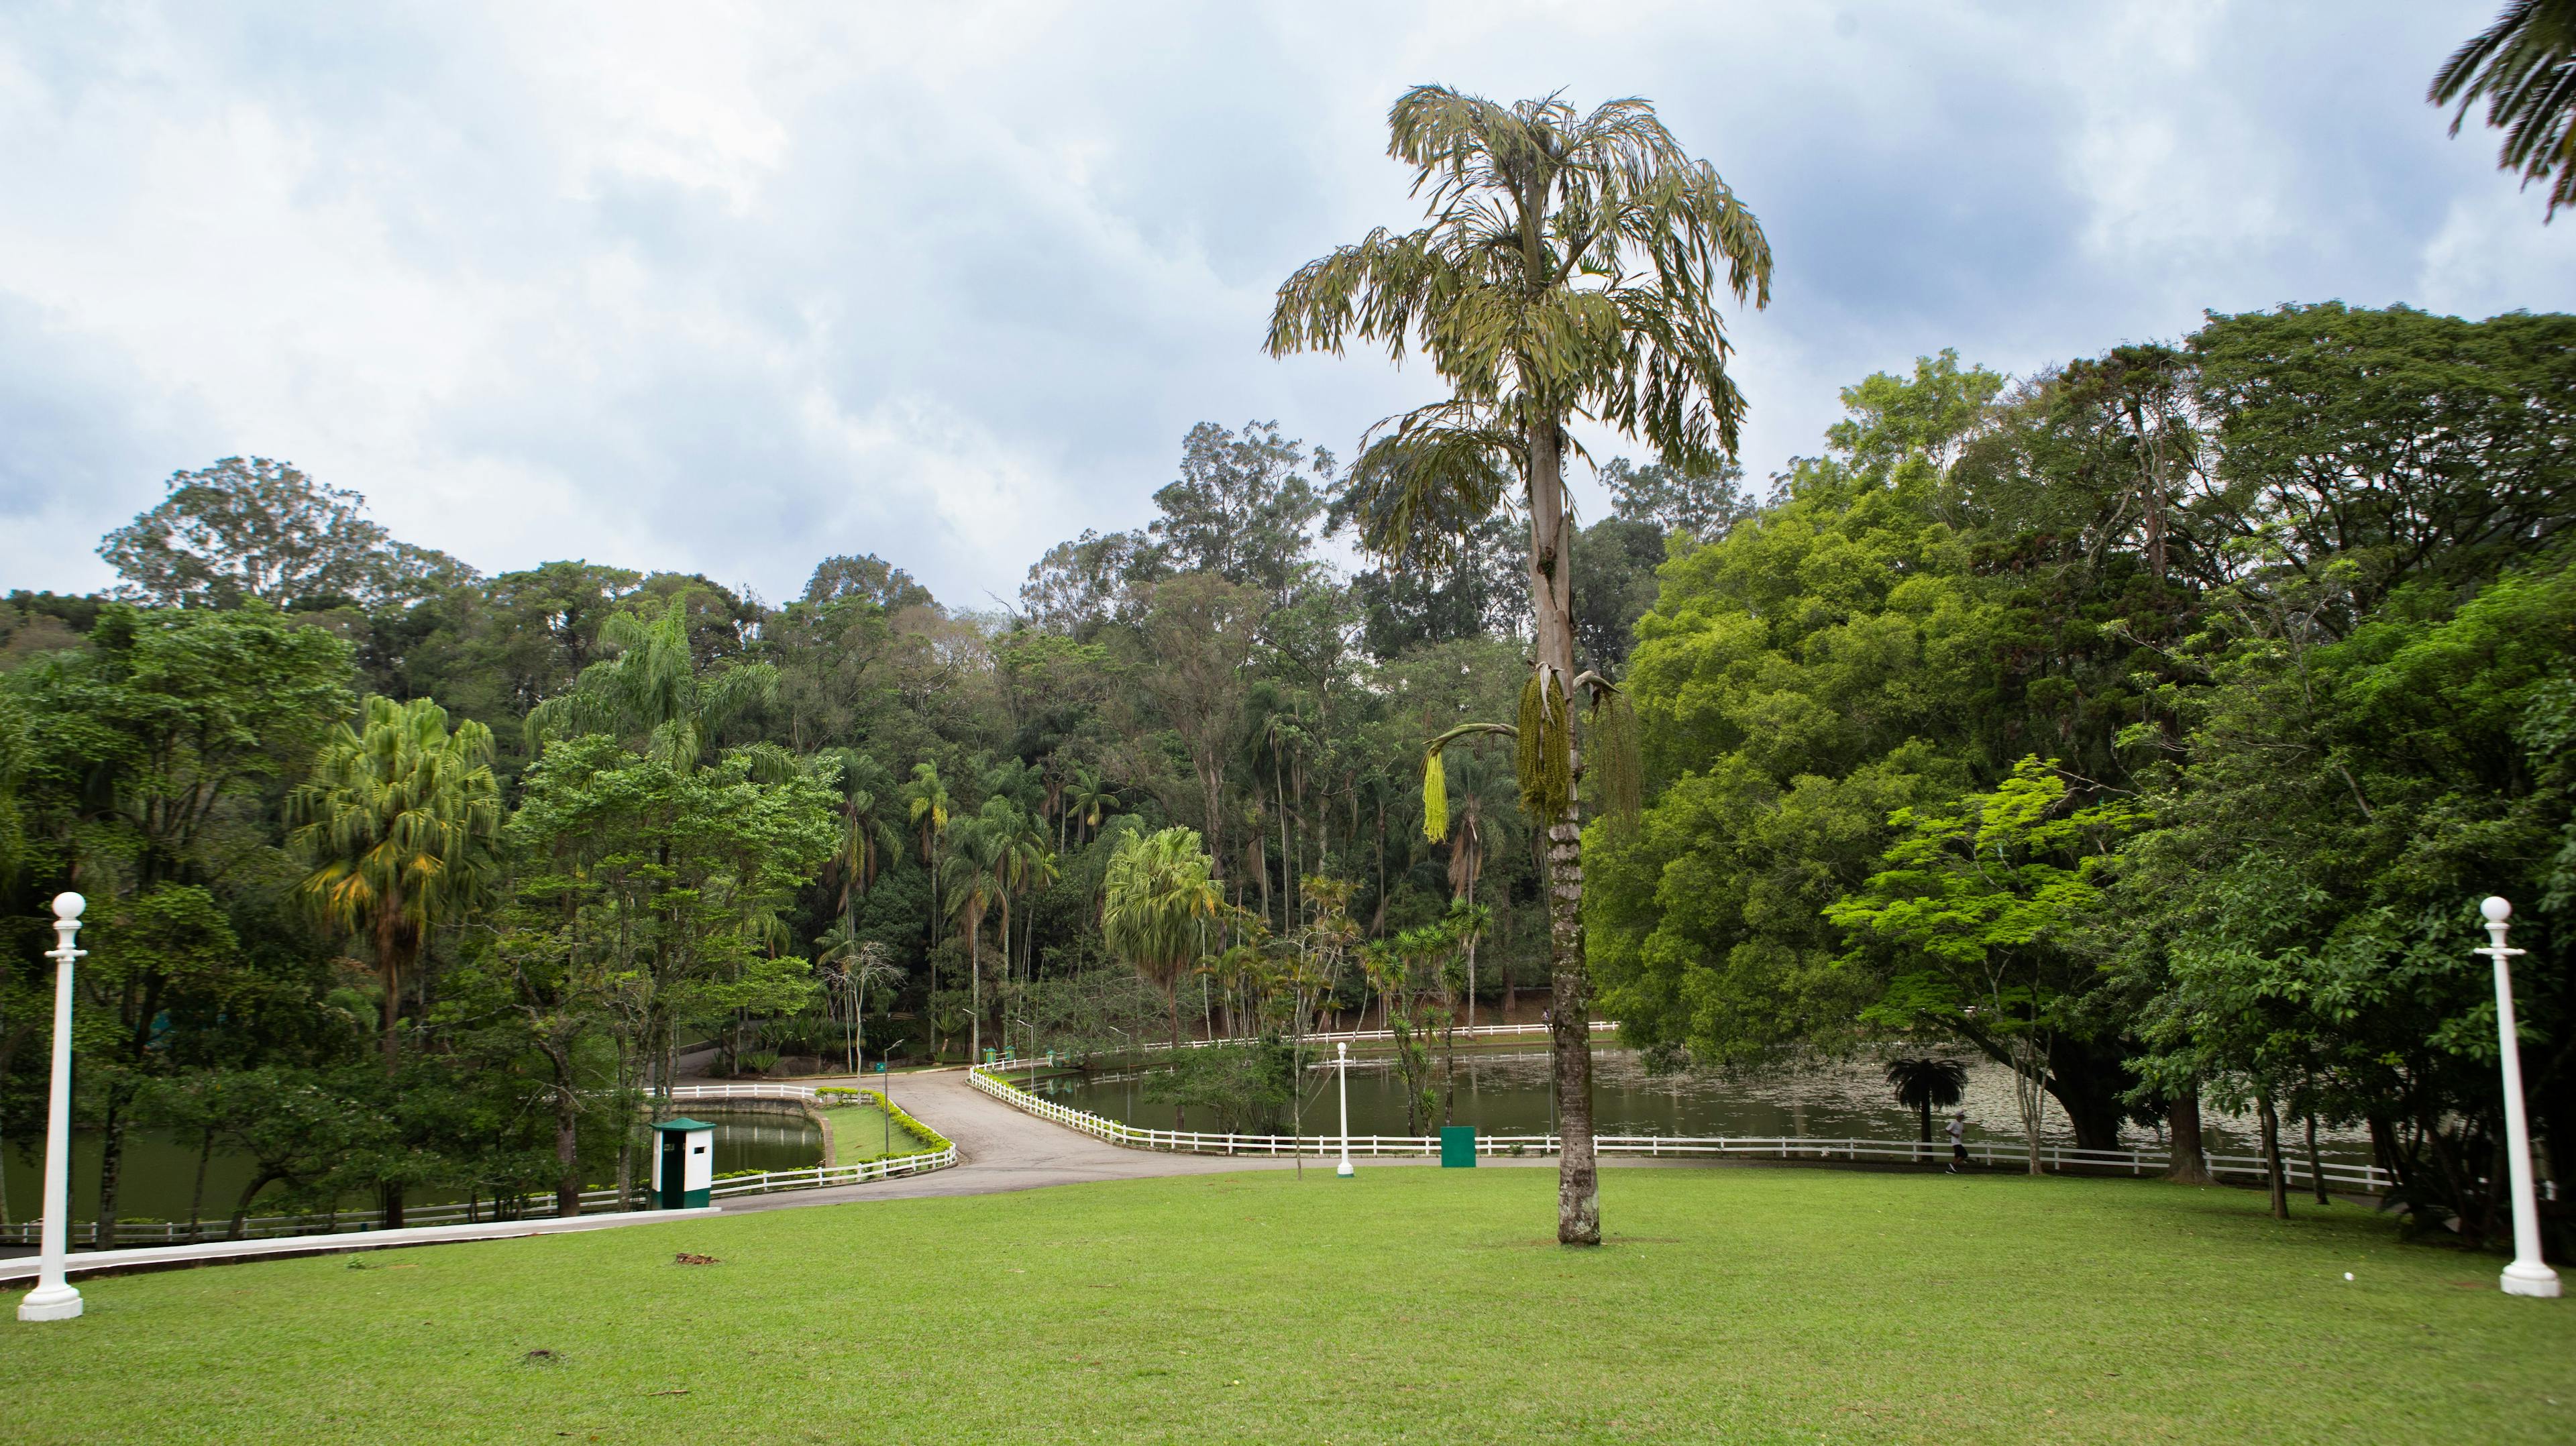 Agenda semanal da Urbia divulga atividades gratuitas no Parque Ibirapuera